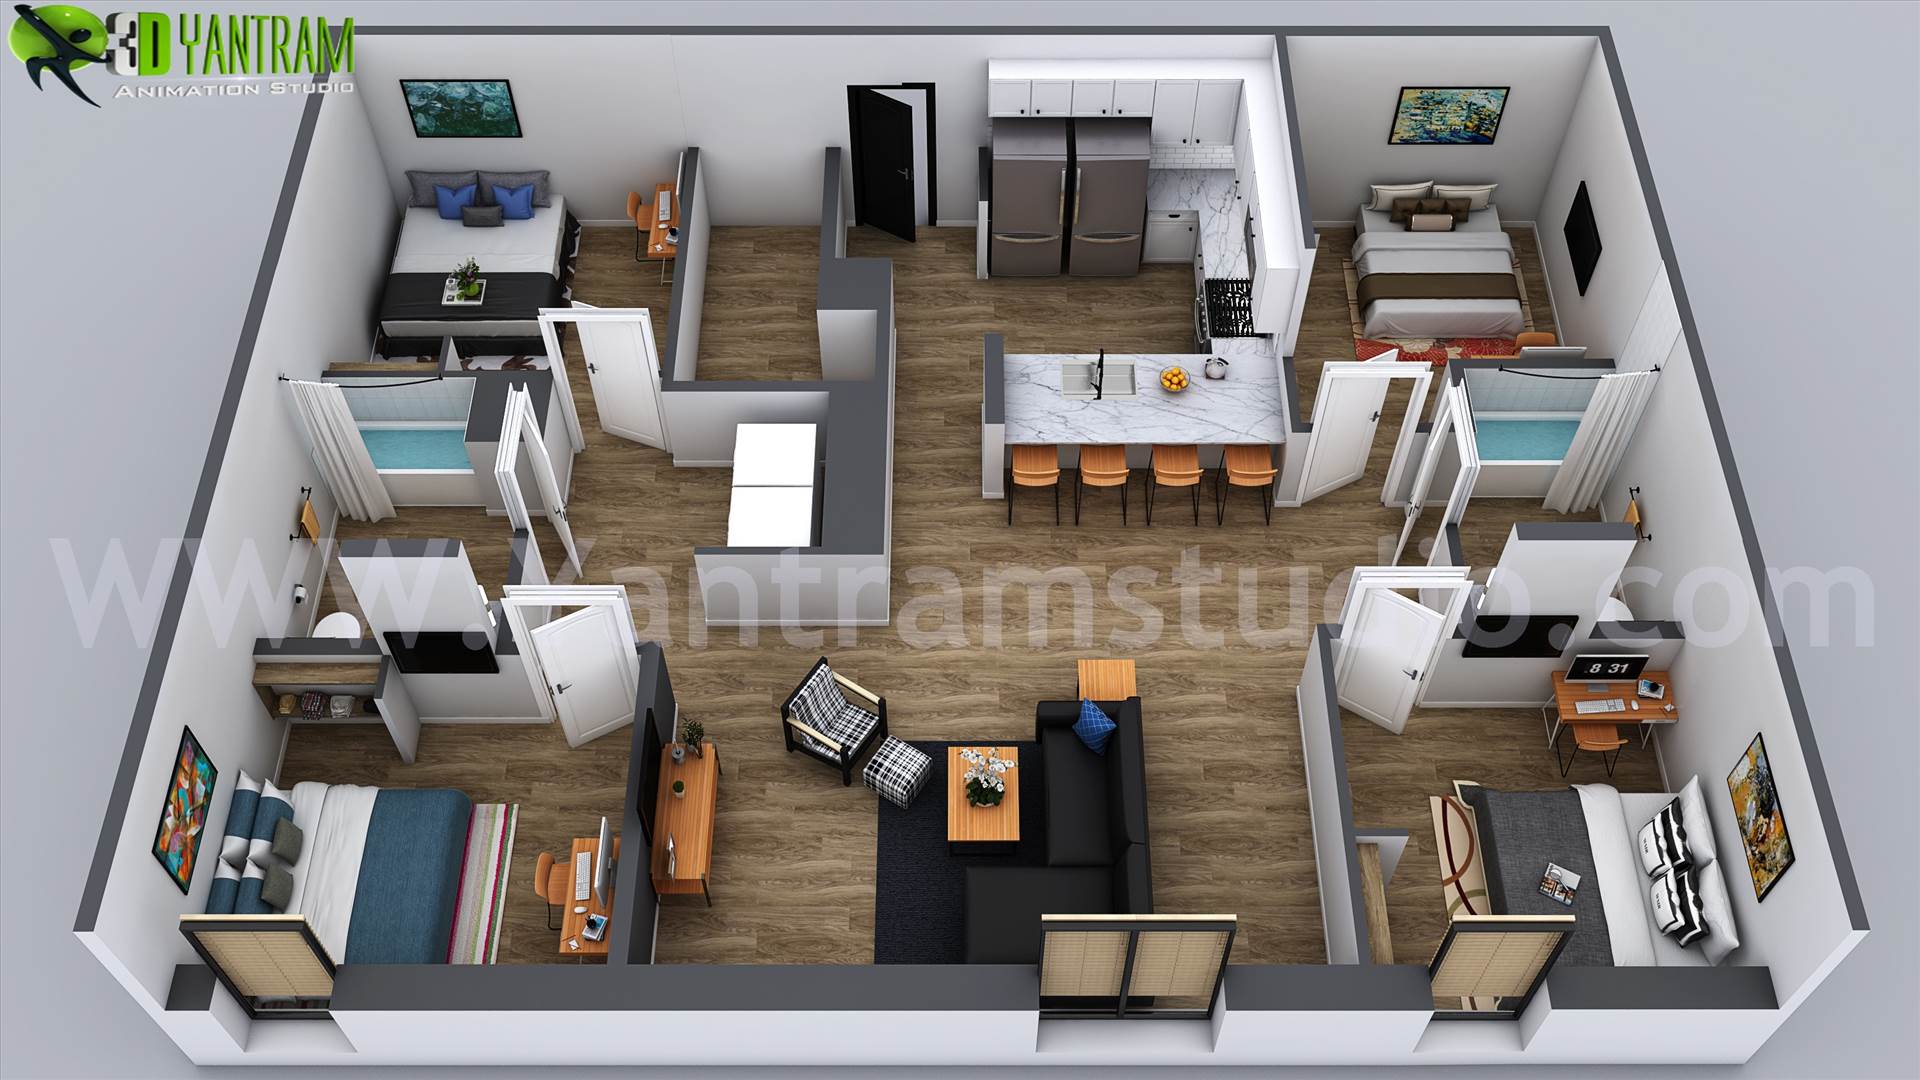 3D Floor Plan Design Services of Residential Apartment in New York.jpg -  by Yantramarchitecturaldesignstudio